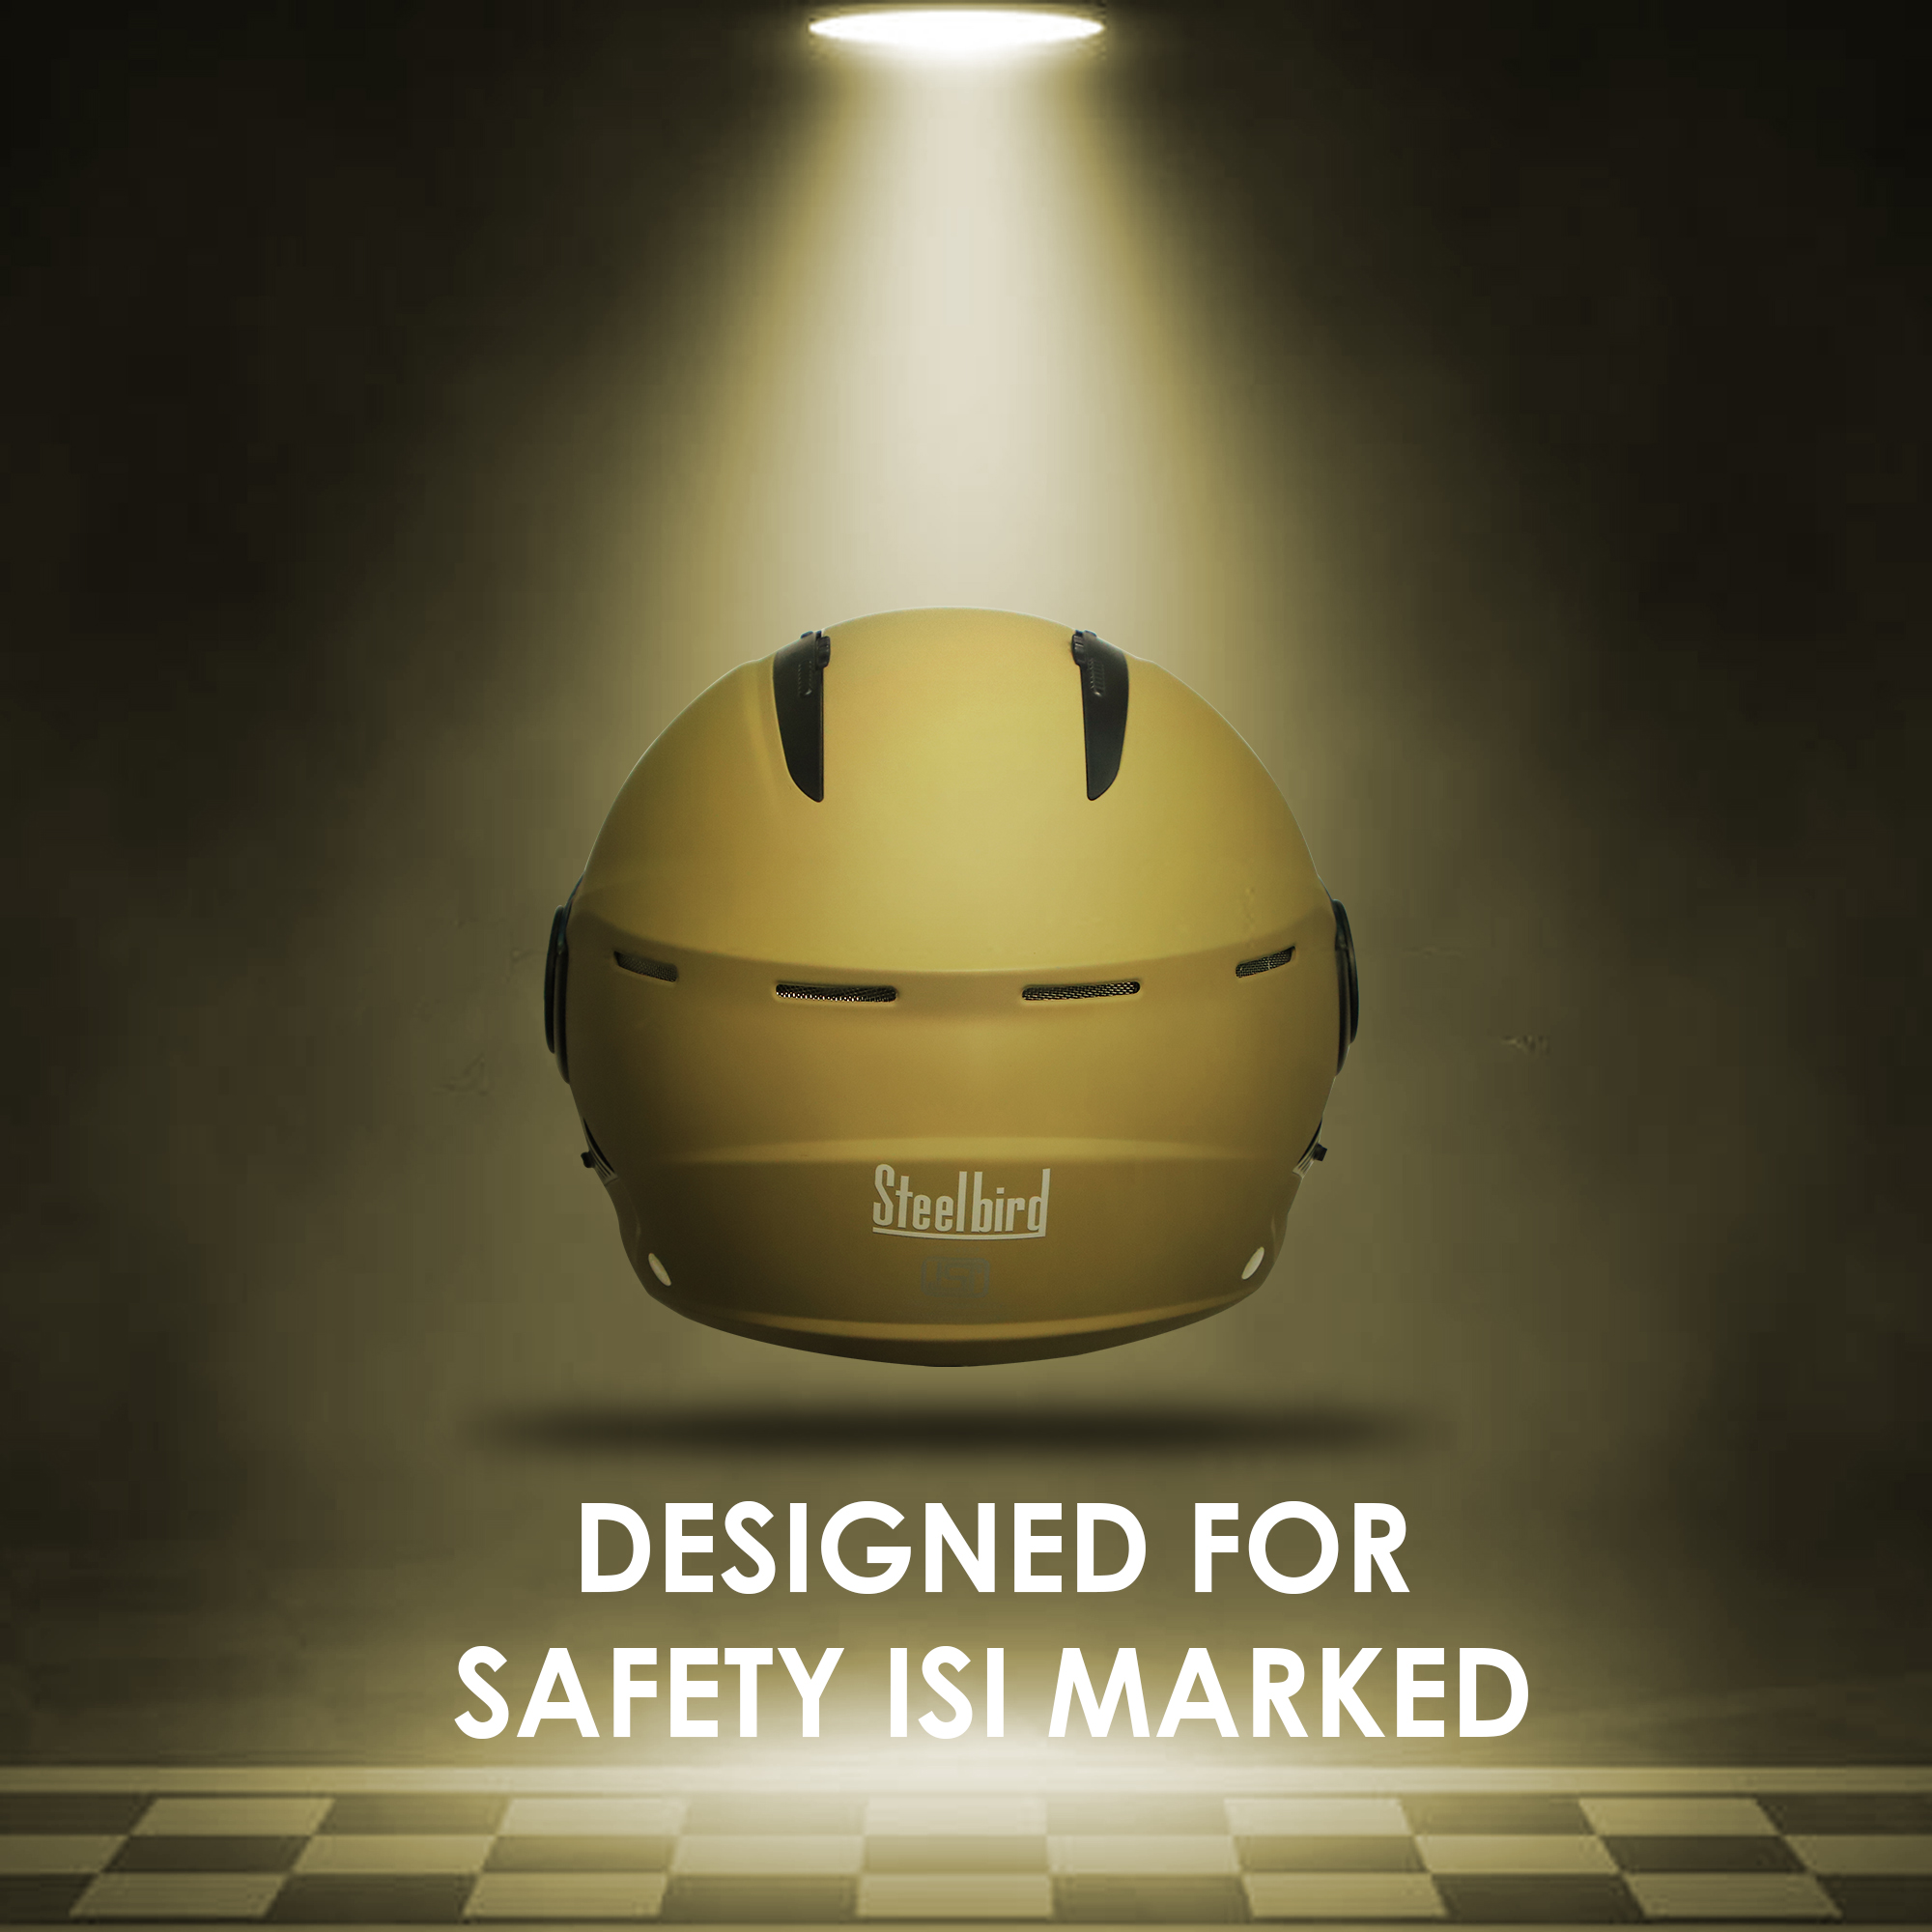 Steelbird SBH-24 Boxx ISI Certified Open Face Helmet For Men And Women (Matt Desert Storm With Clear Visor)